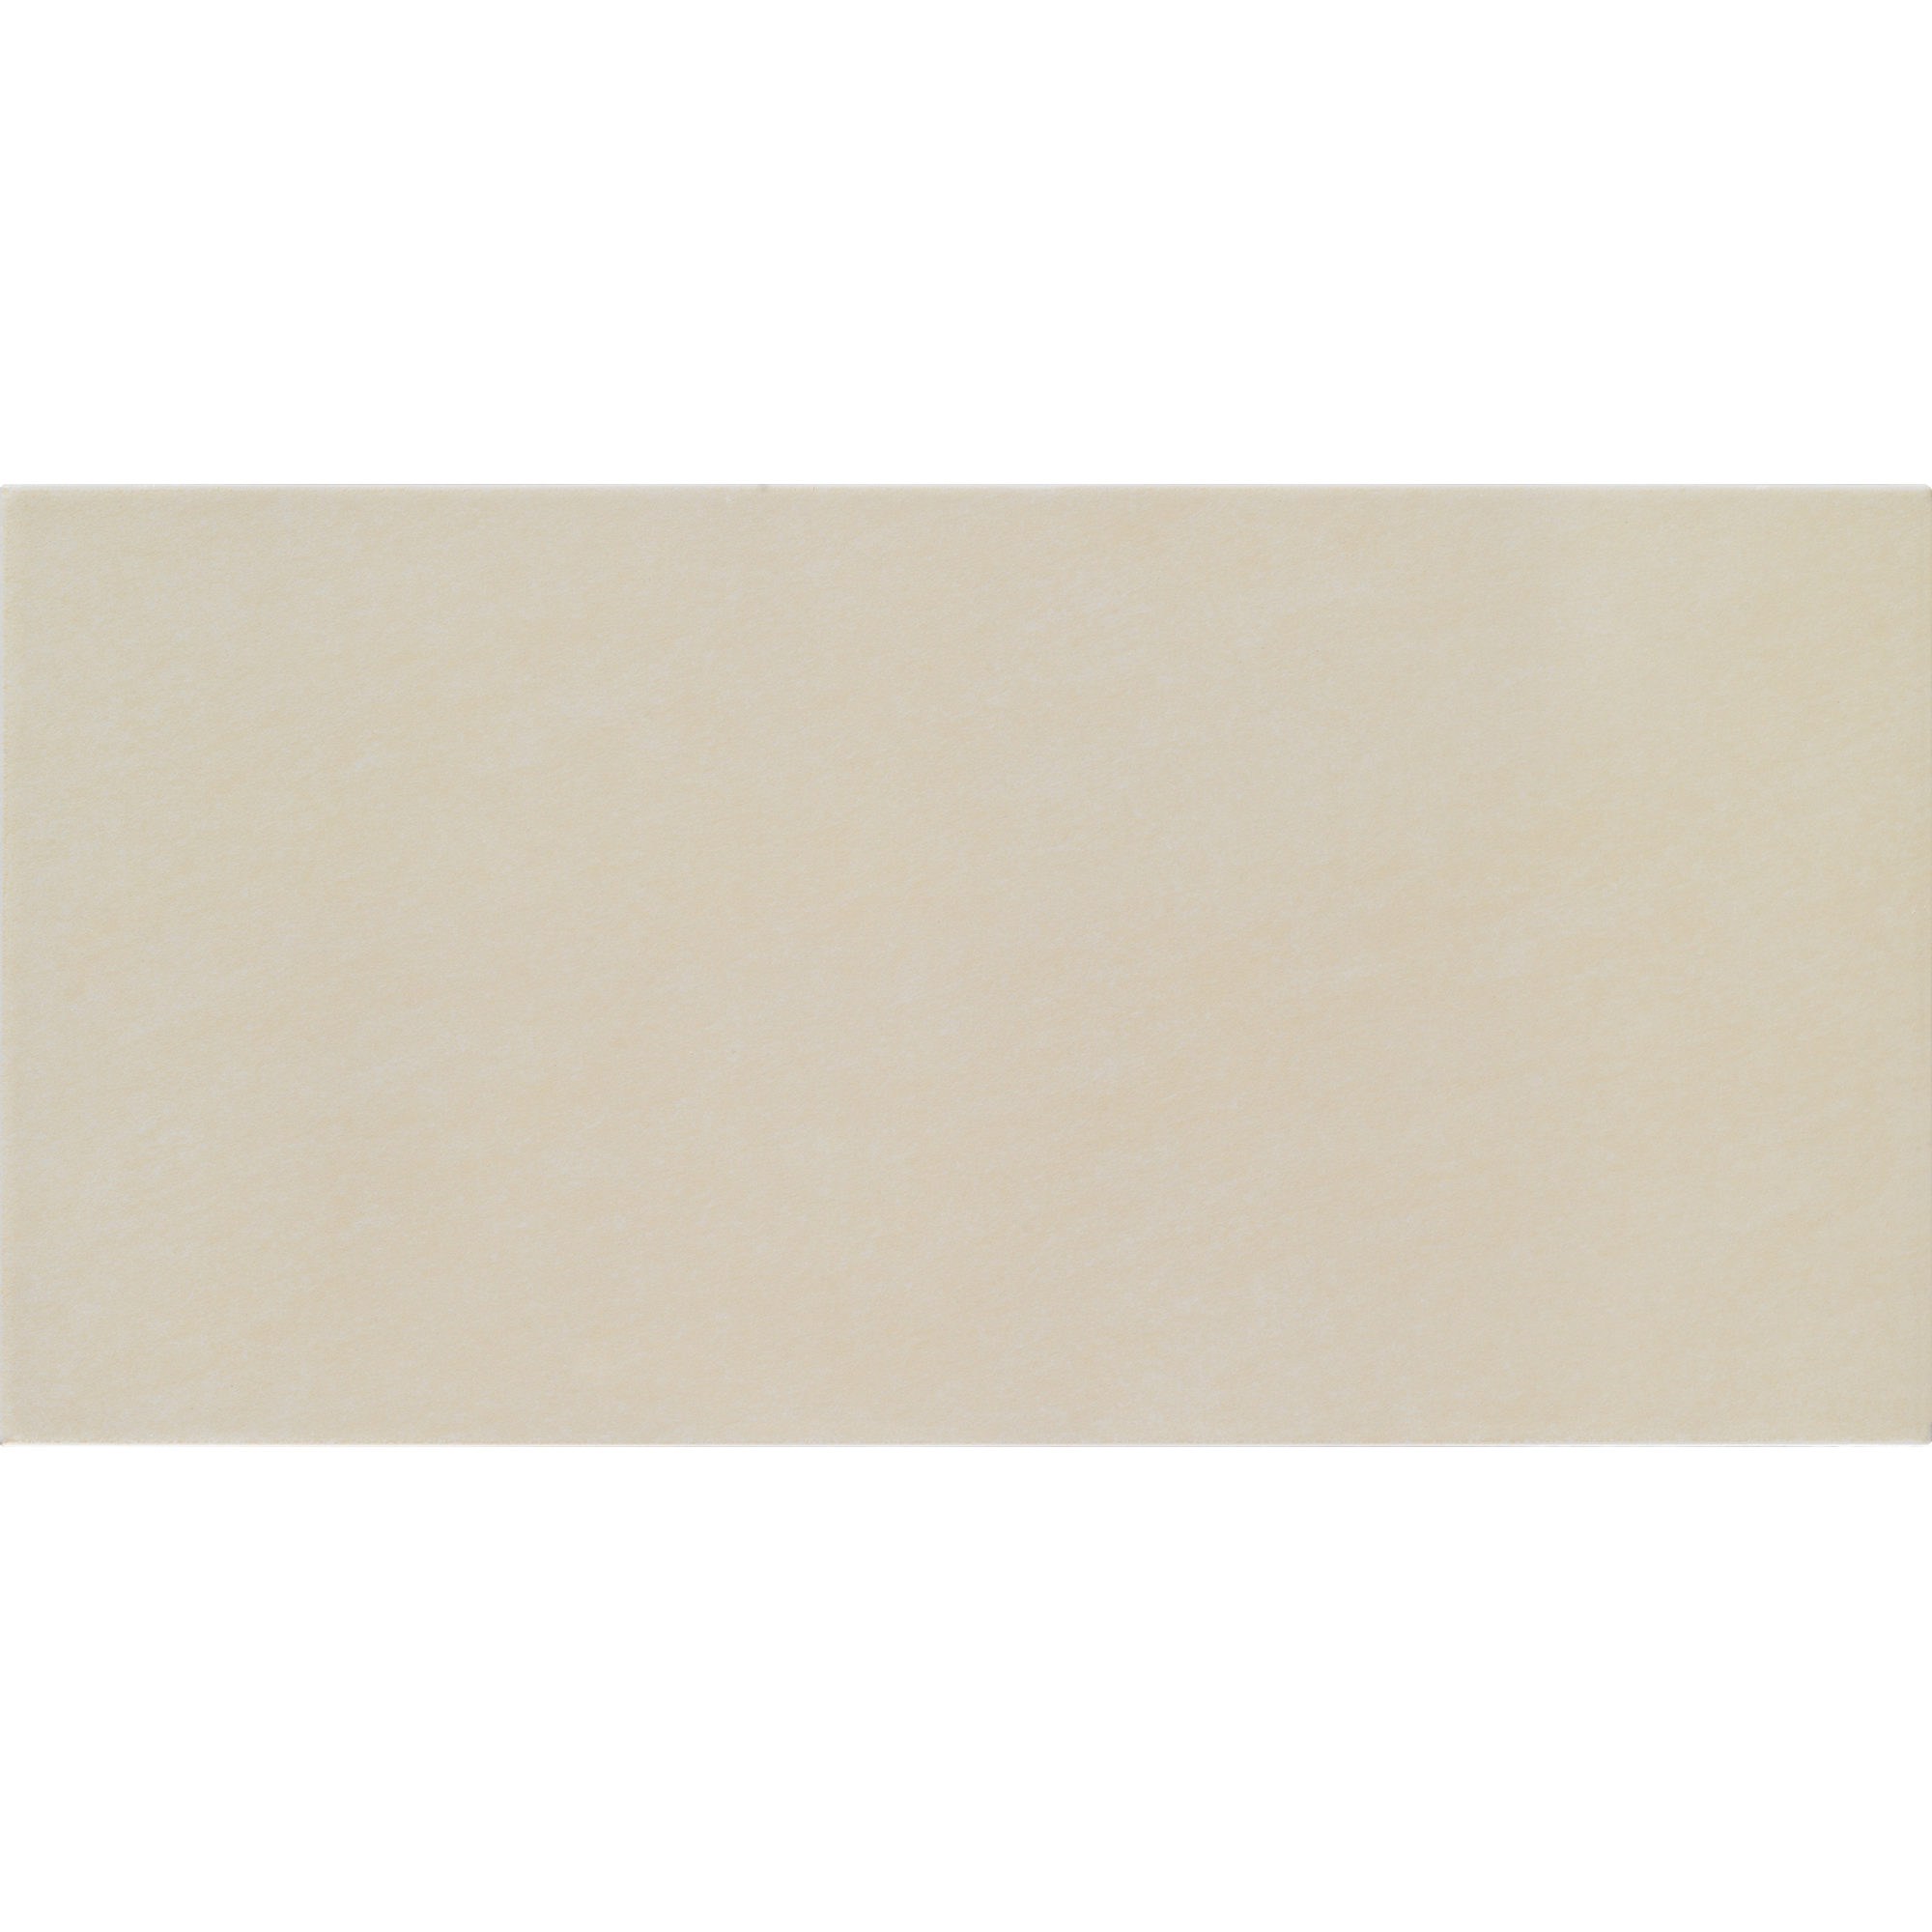 Bodenfliese 'Trend' Feinsteinzeug beige 30,5 x 61 cm + product picture